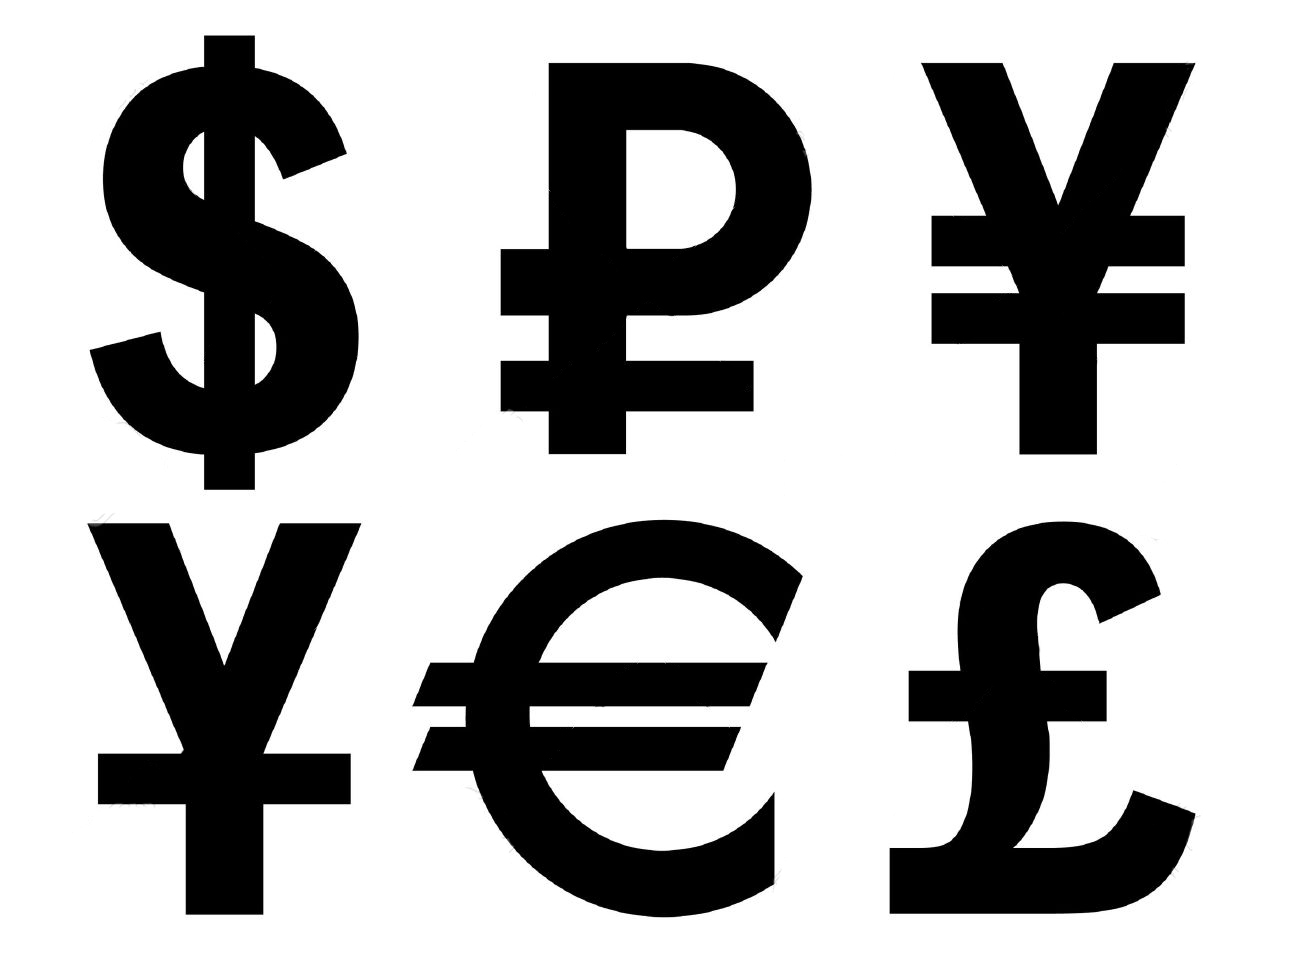 обозначение валют в стиме фото 19